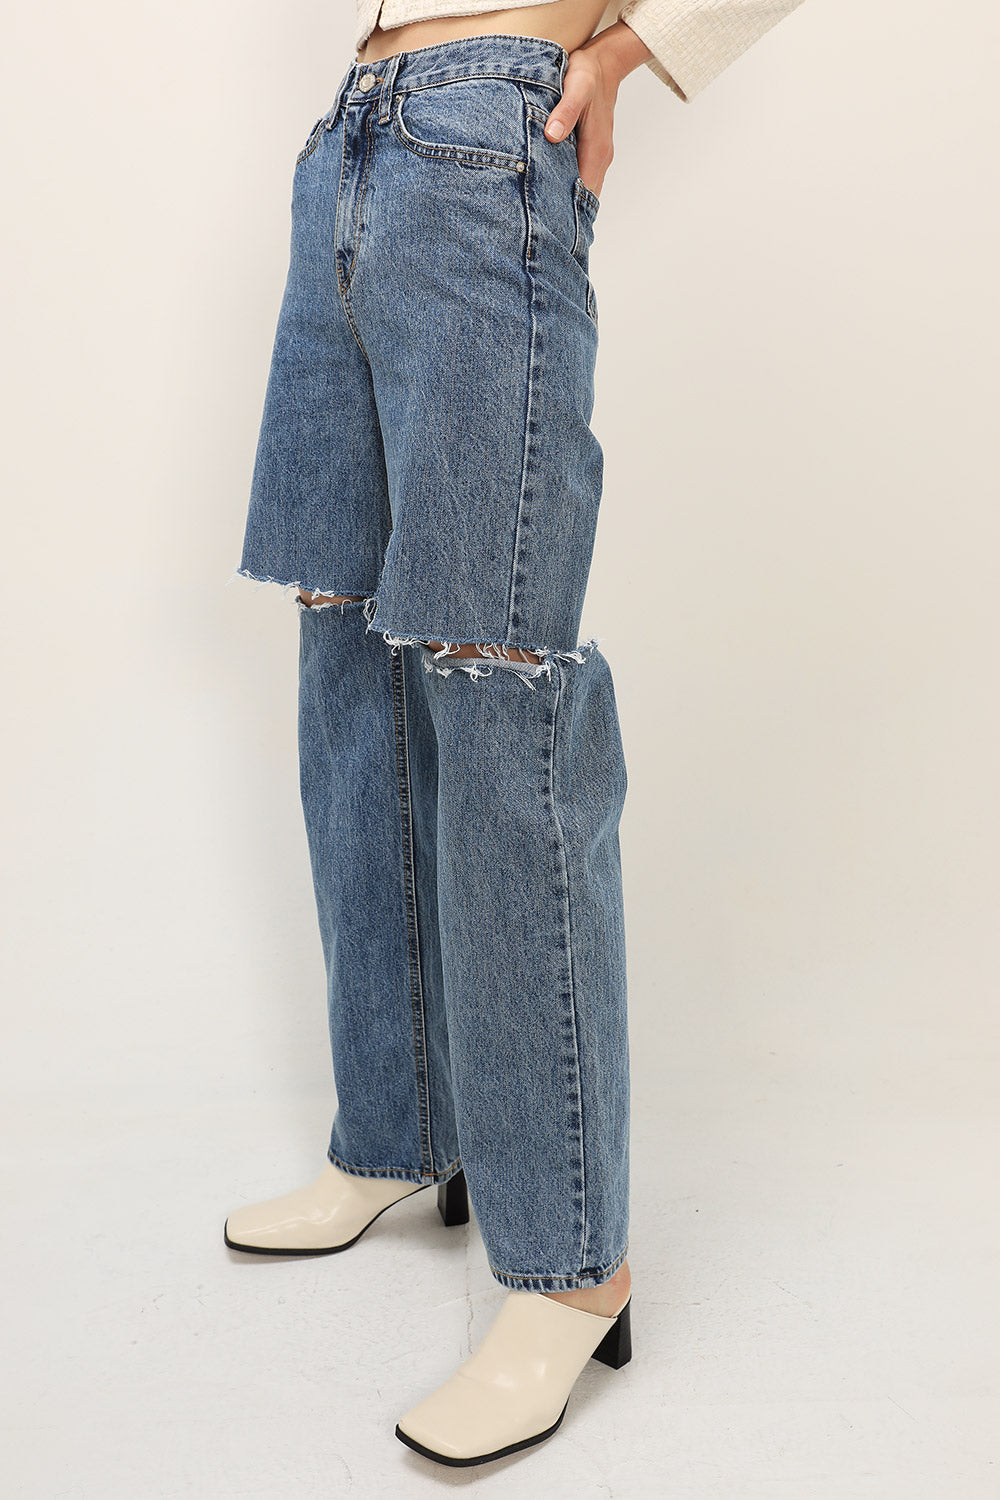 storets.com Amia Ripped Slash Jeans